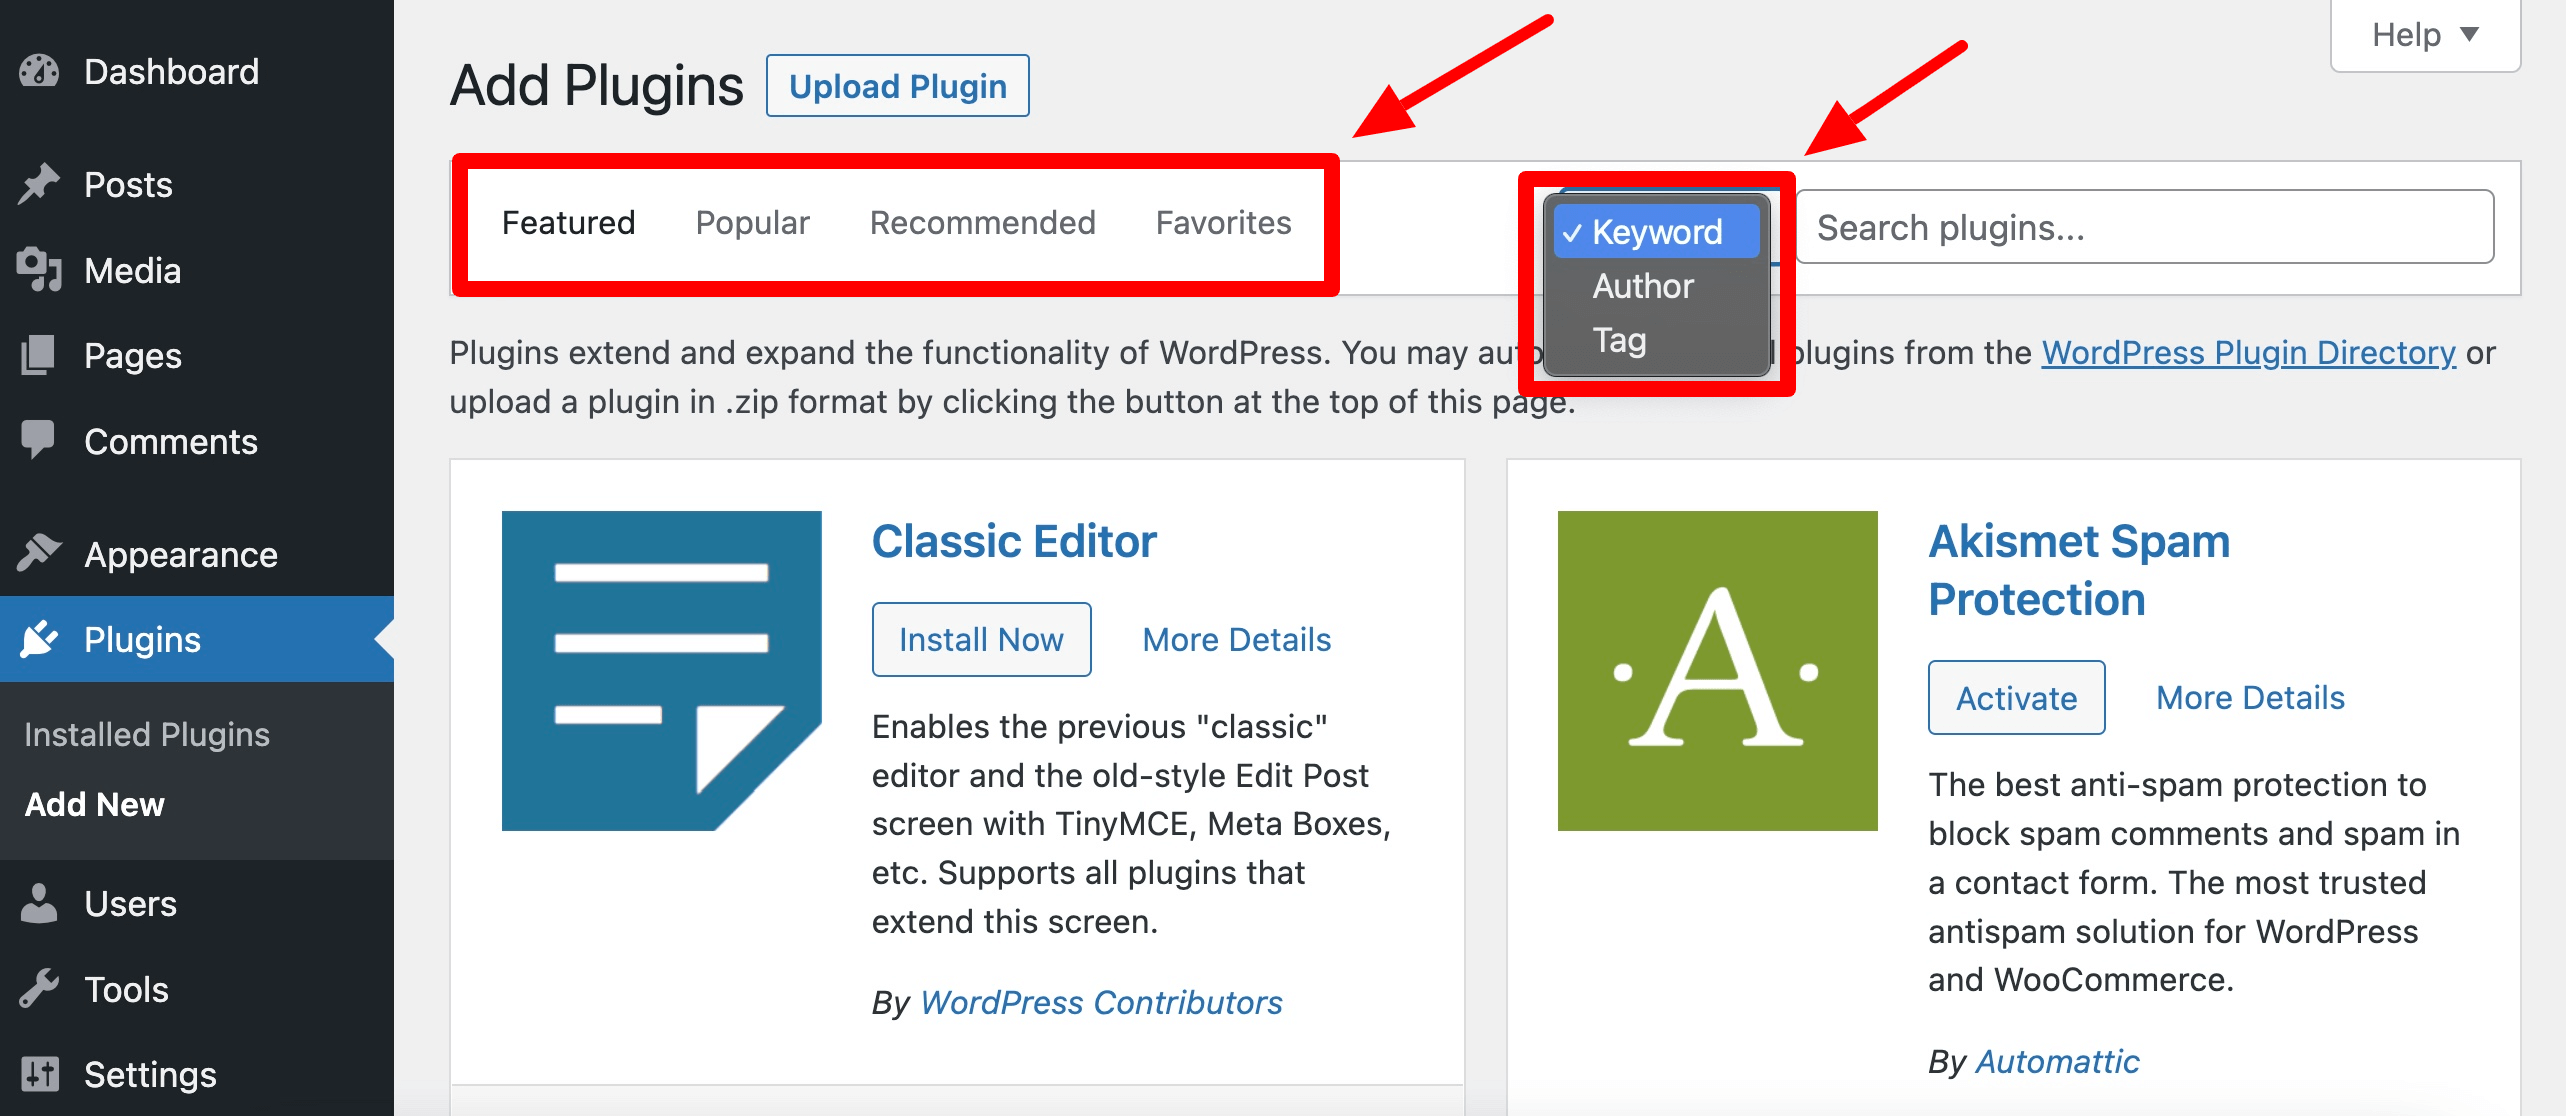 Filter plugins in WordPress admin dashboard